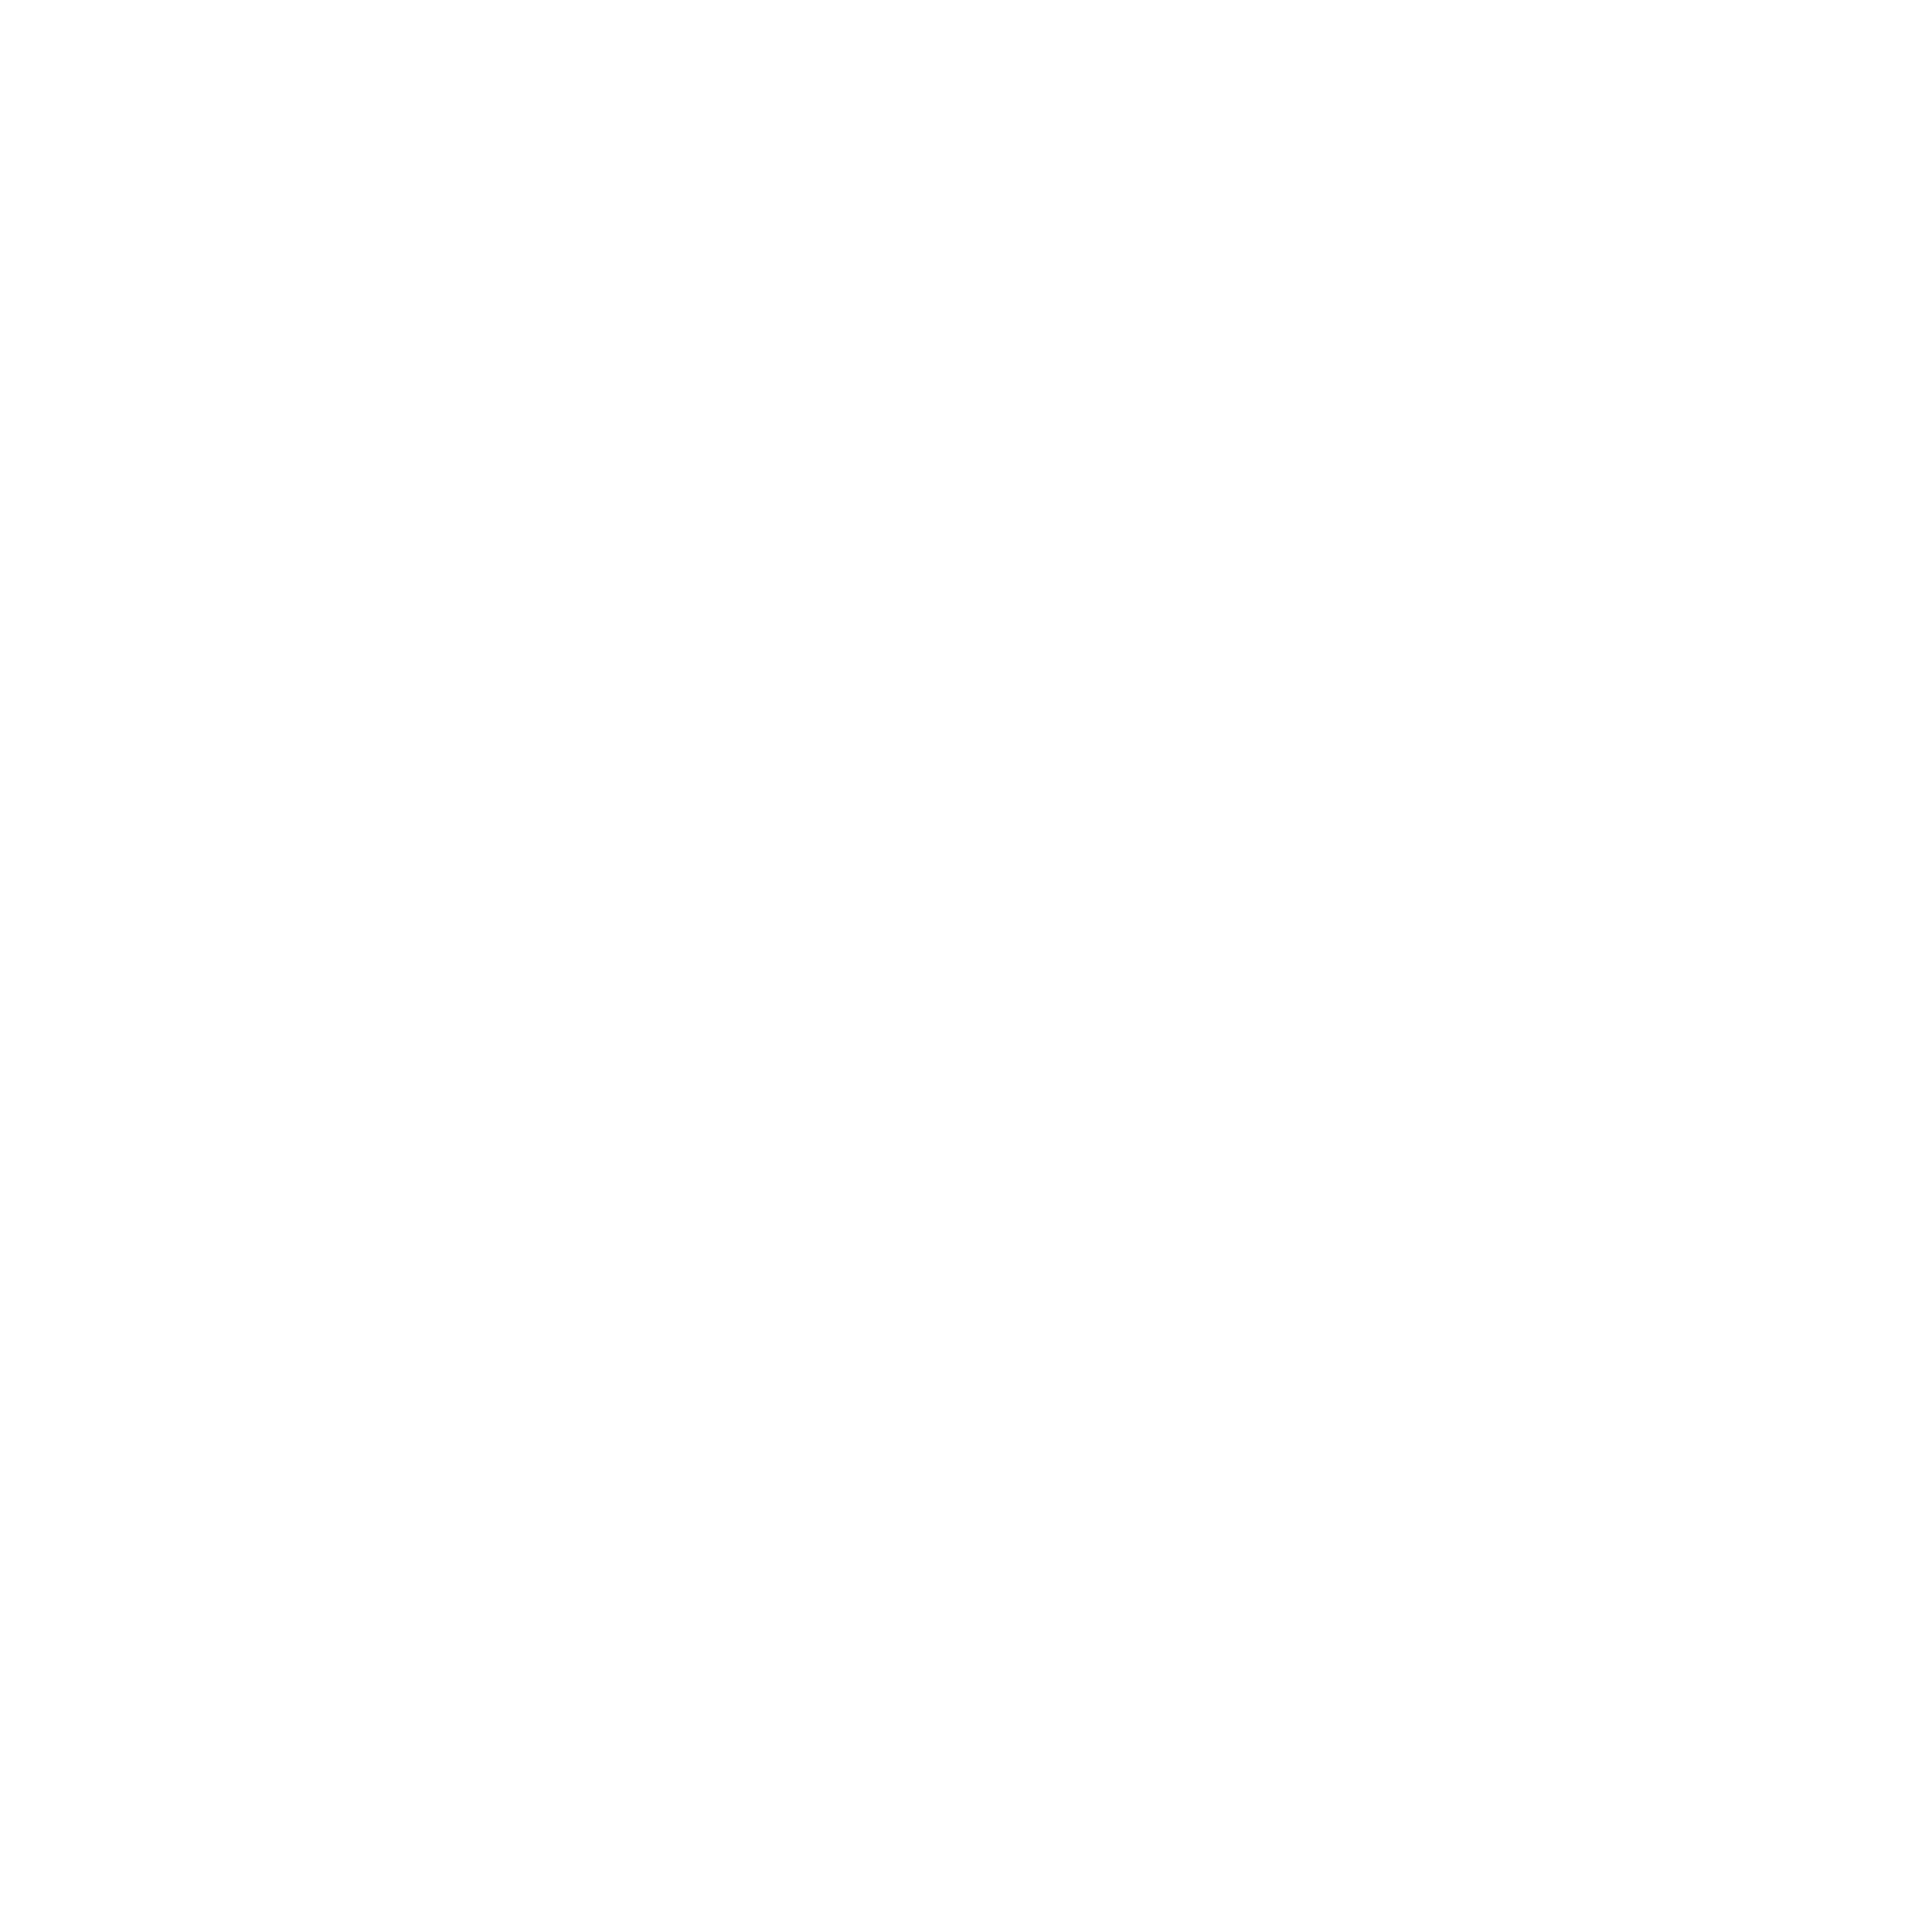 ASE Logo - Ase Certified Logo PNG Transparent Ase Certified Logo.PNG Images ...